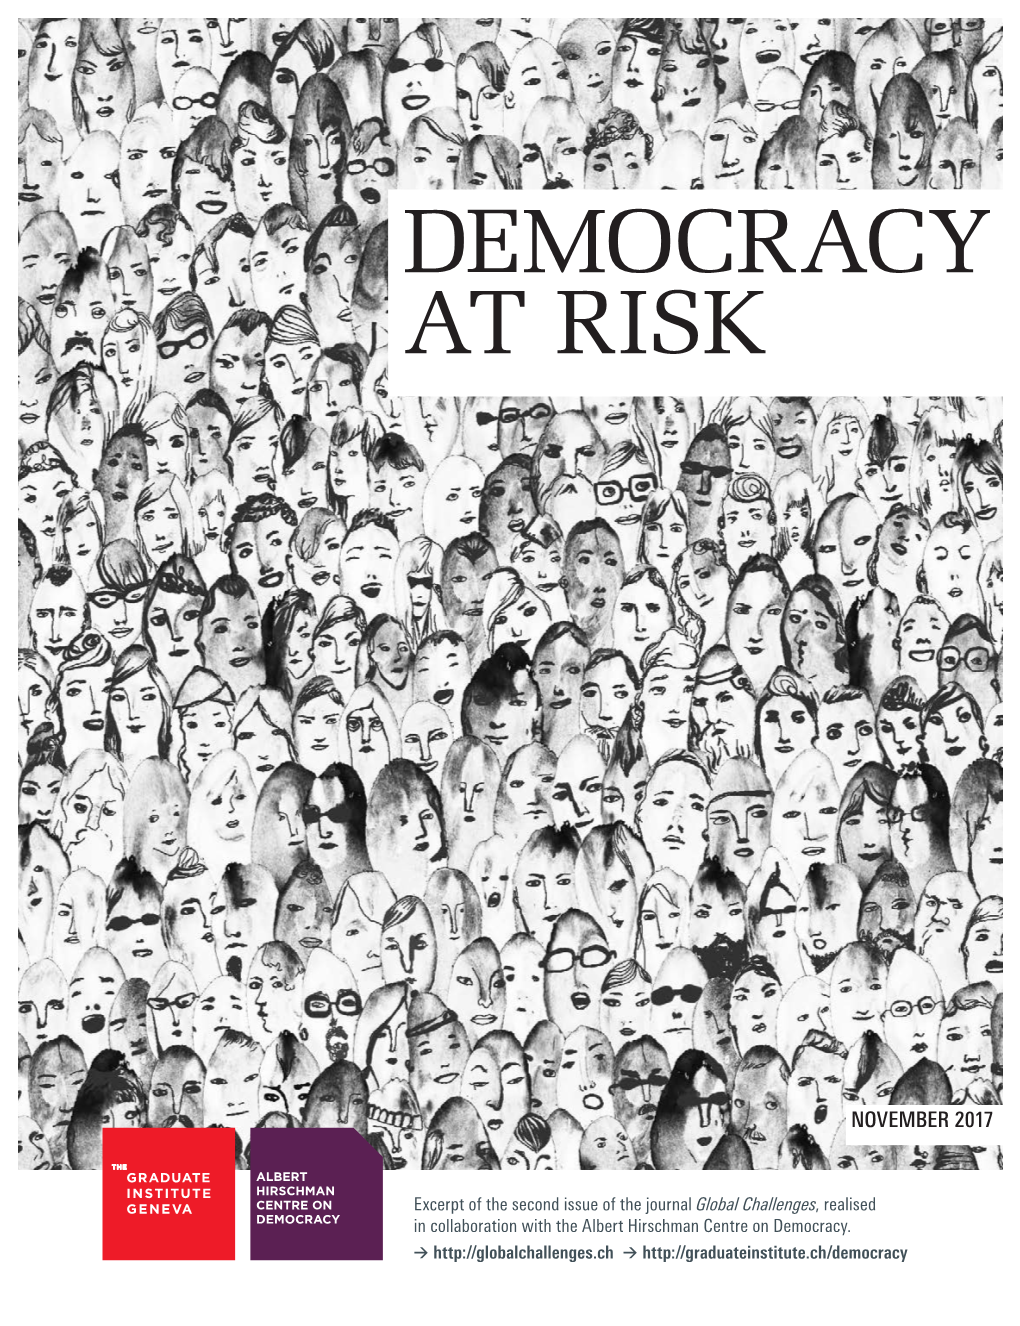 Democracy at Risk